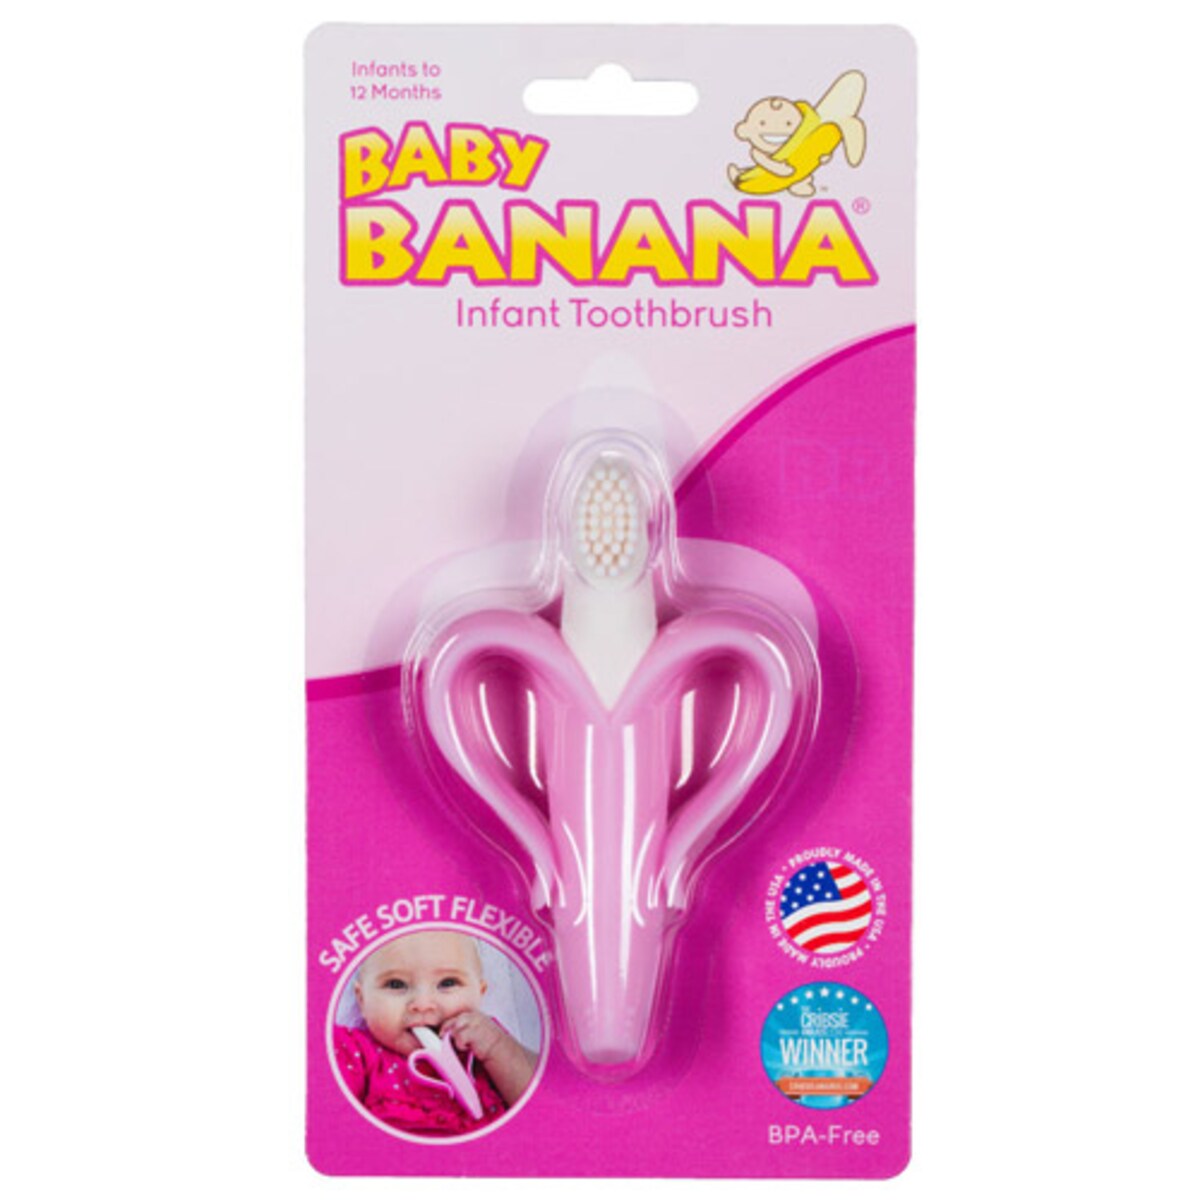 Baby Banana Infant Toothbrush Pink